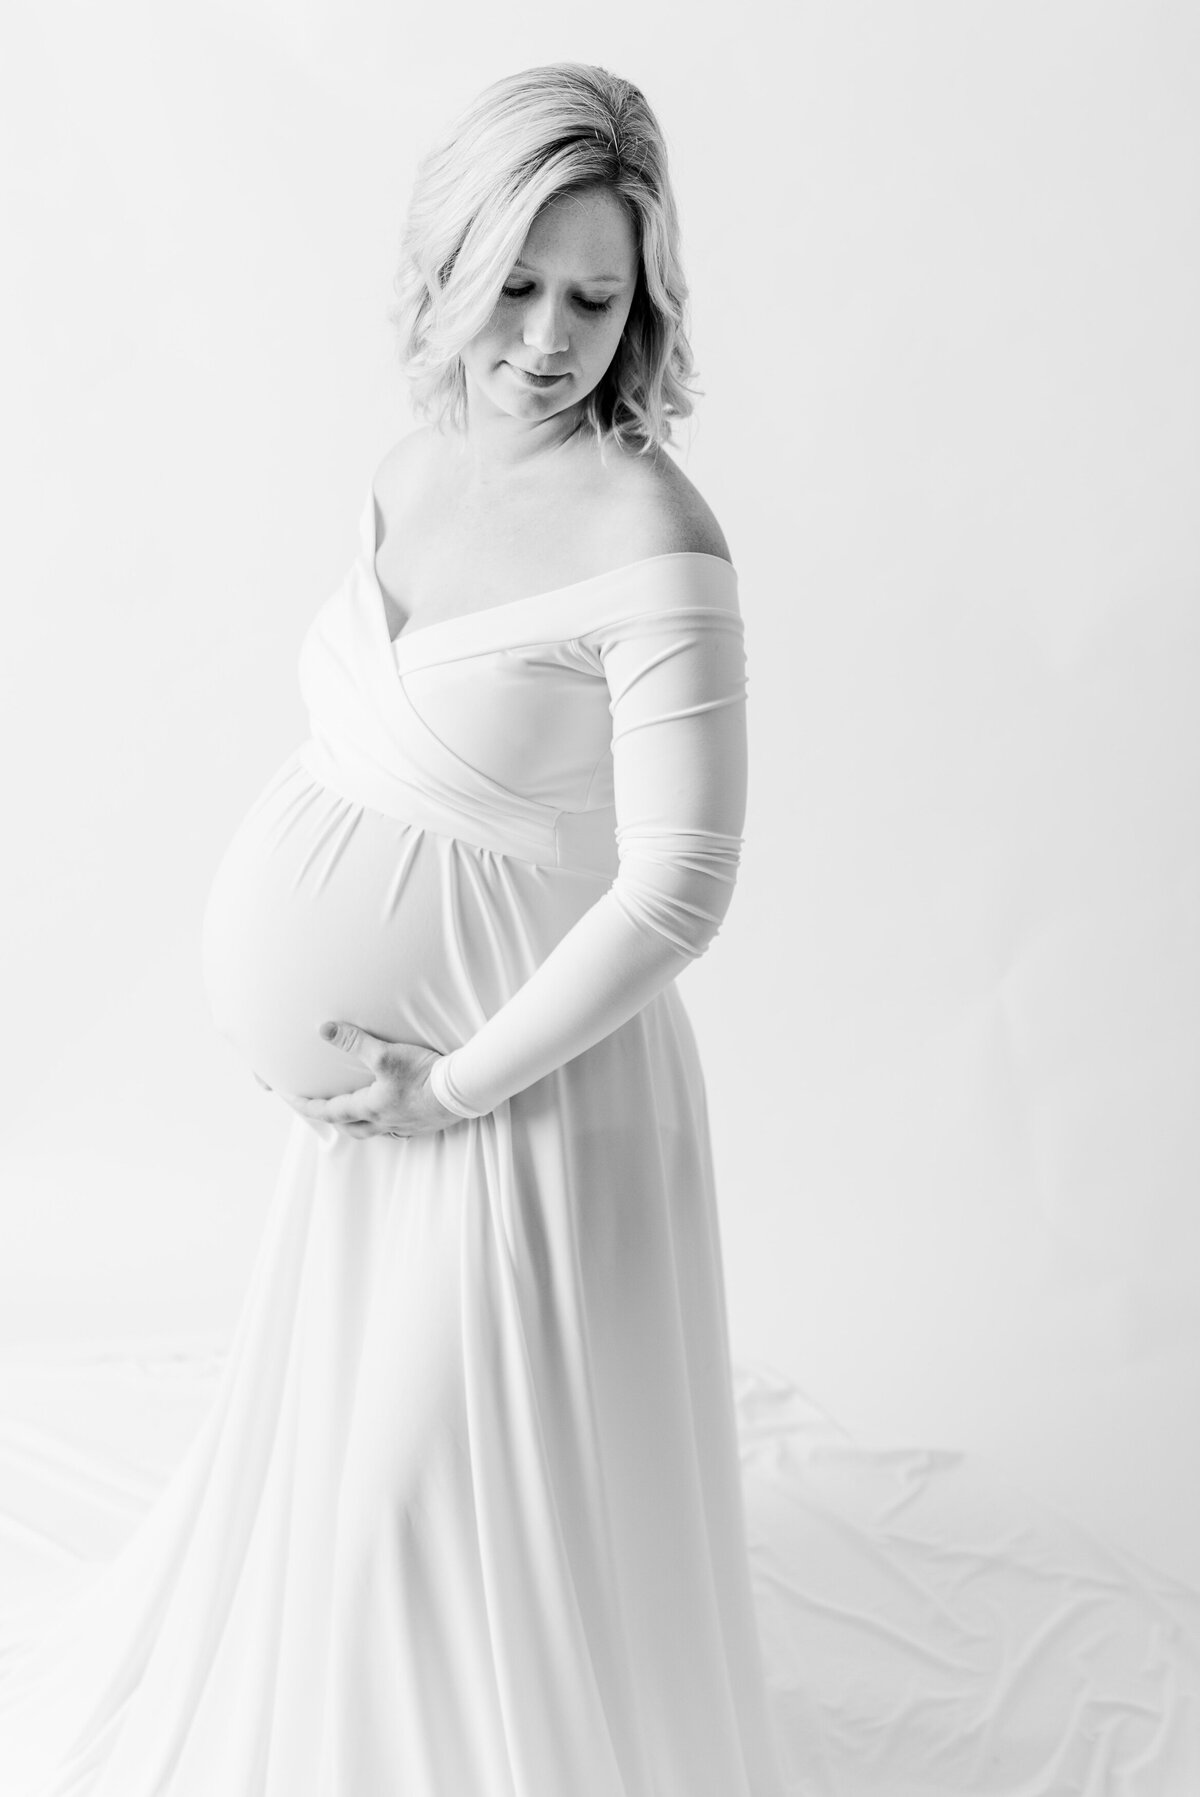 aiden-laurette-photography-maternity-photographer363